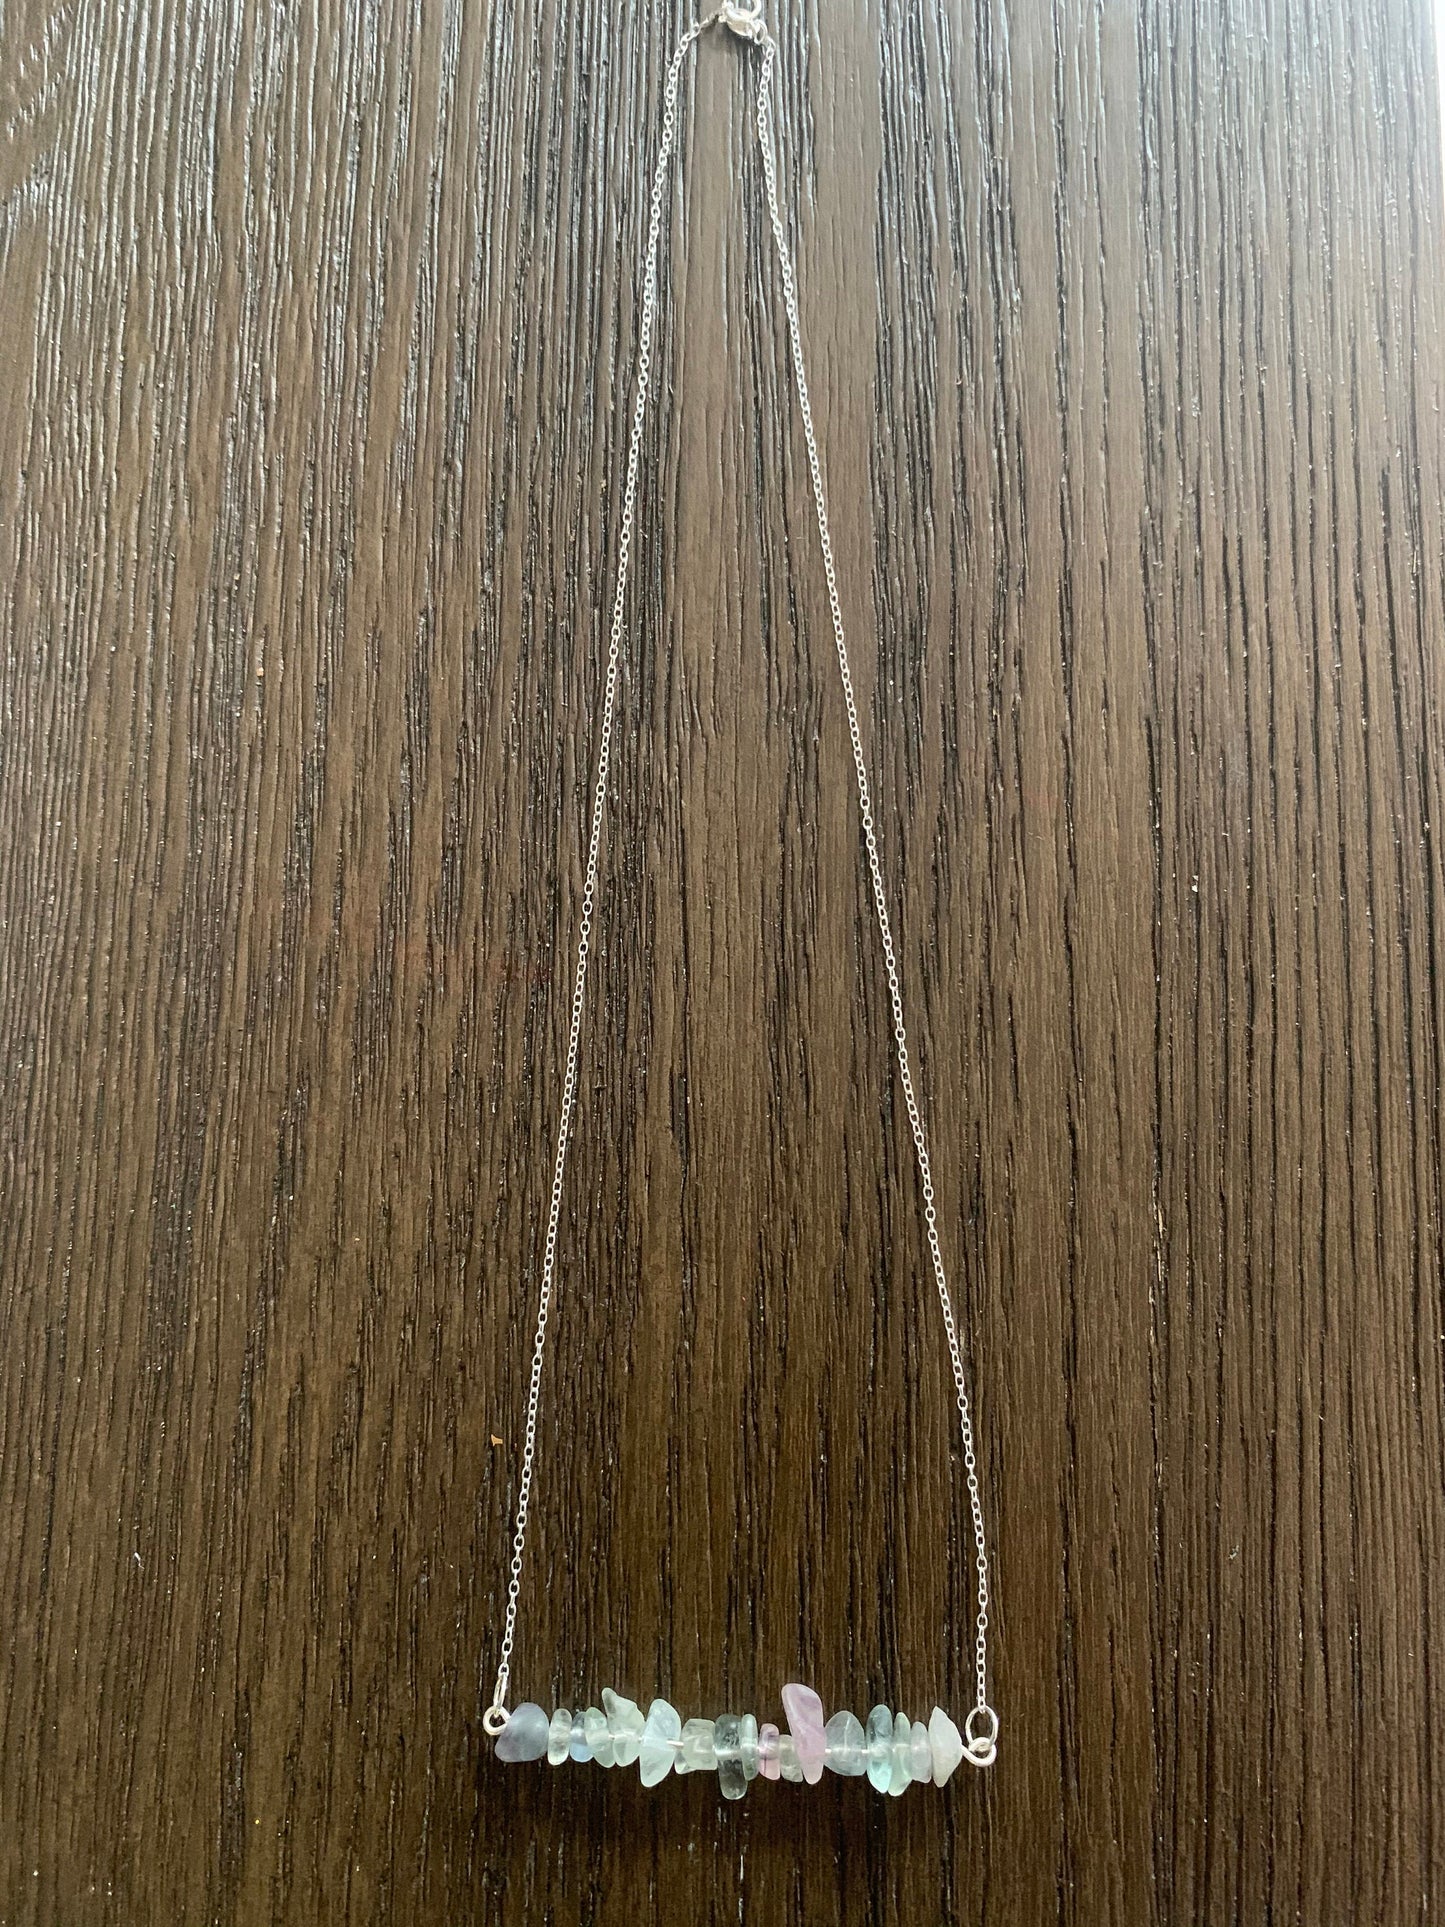 Fluorite chip bar pendant necklace